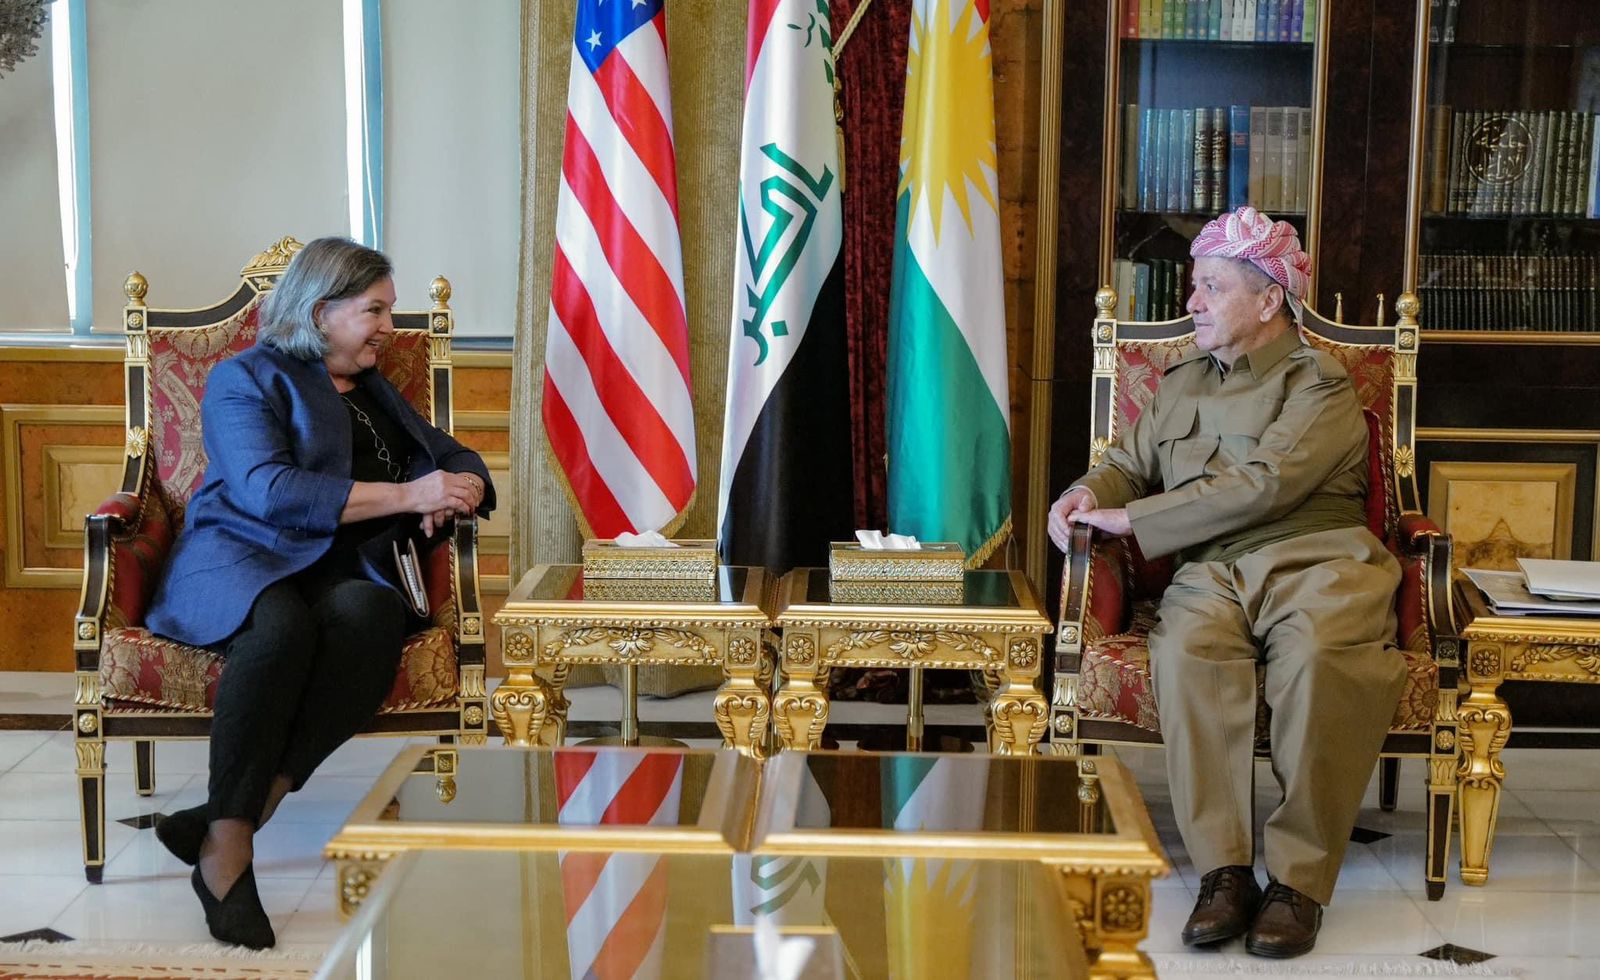 Kurdish leader Barzani, U.S. Under Secretary of State highlight coordination in addressing terrorism